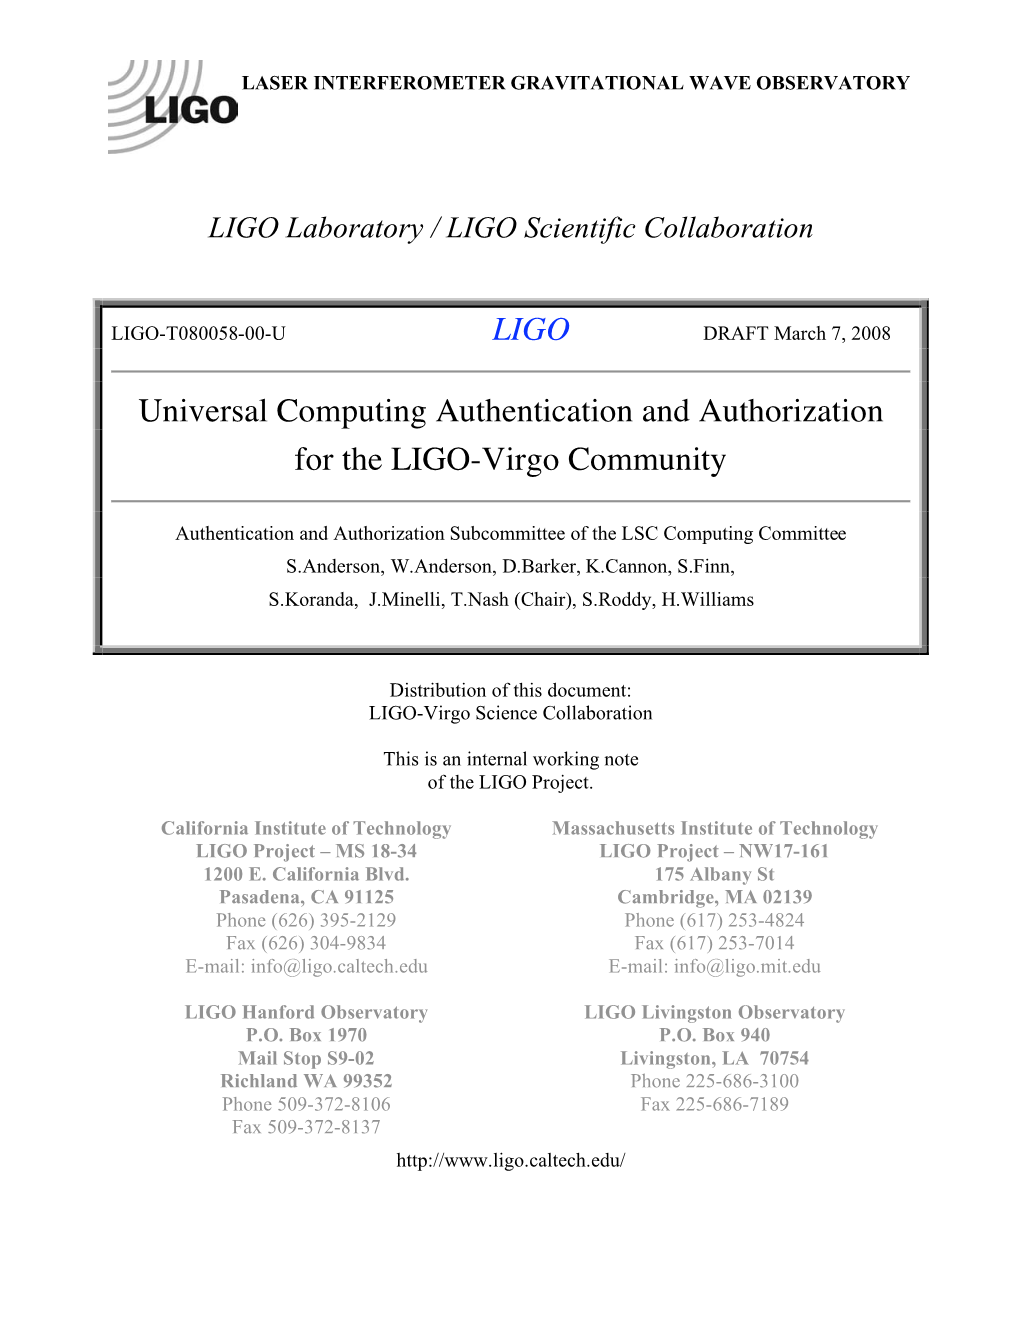 LIGO Universal Computing Authentication and Authorization For